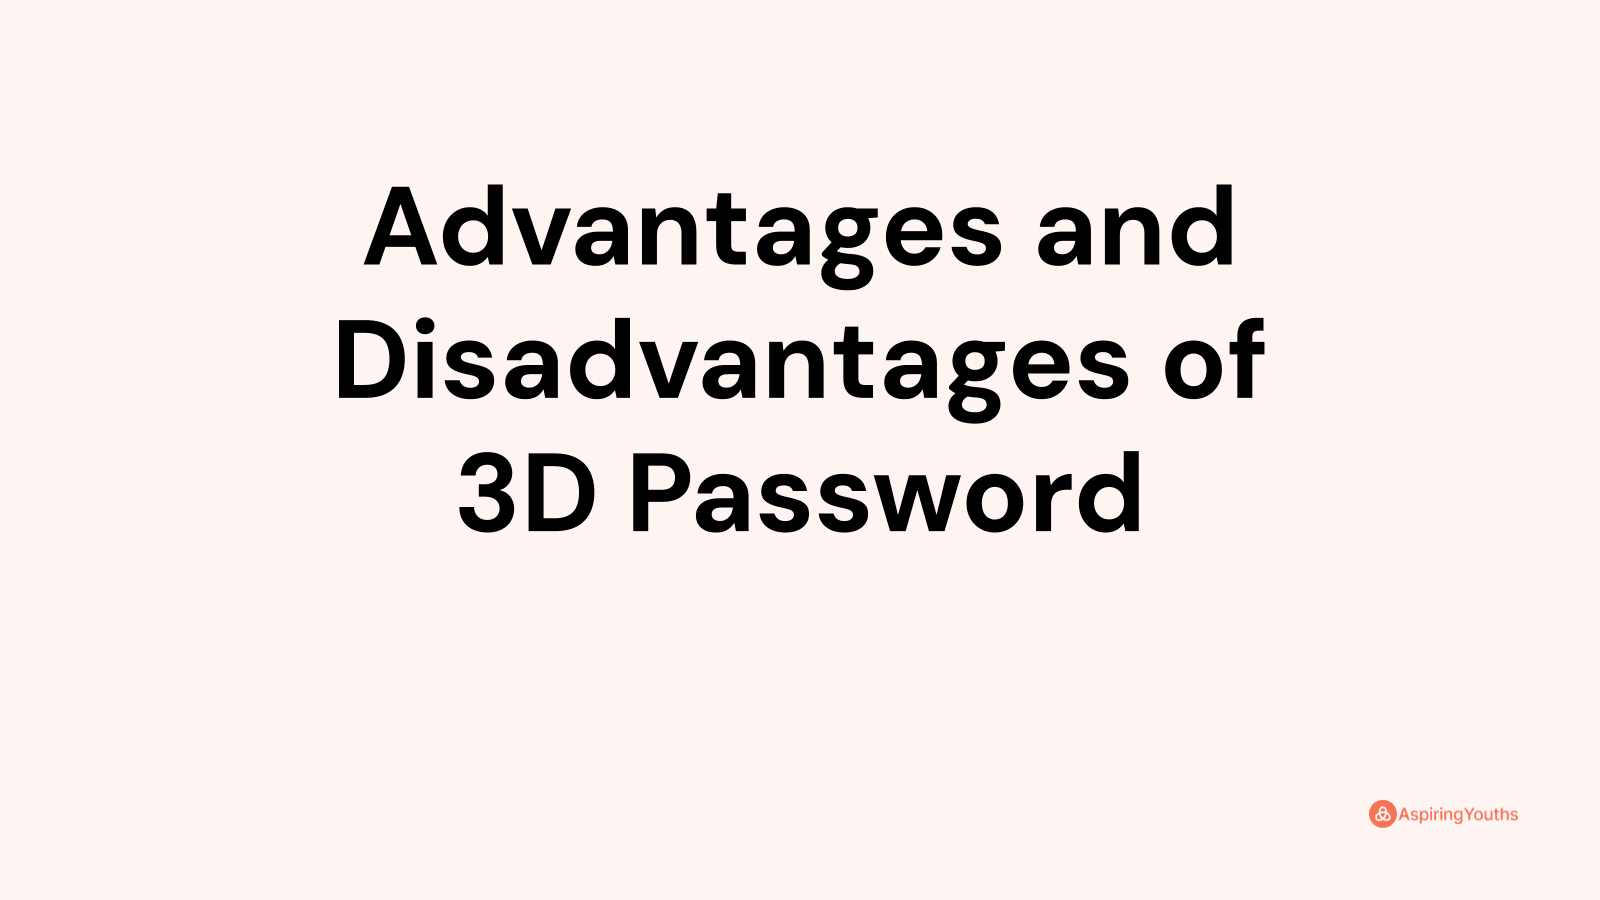 Advantages and disadvantages of 3D Password